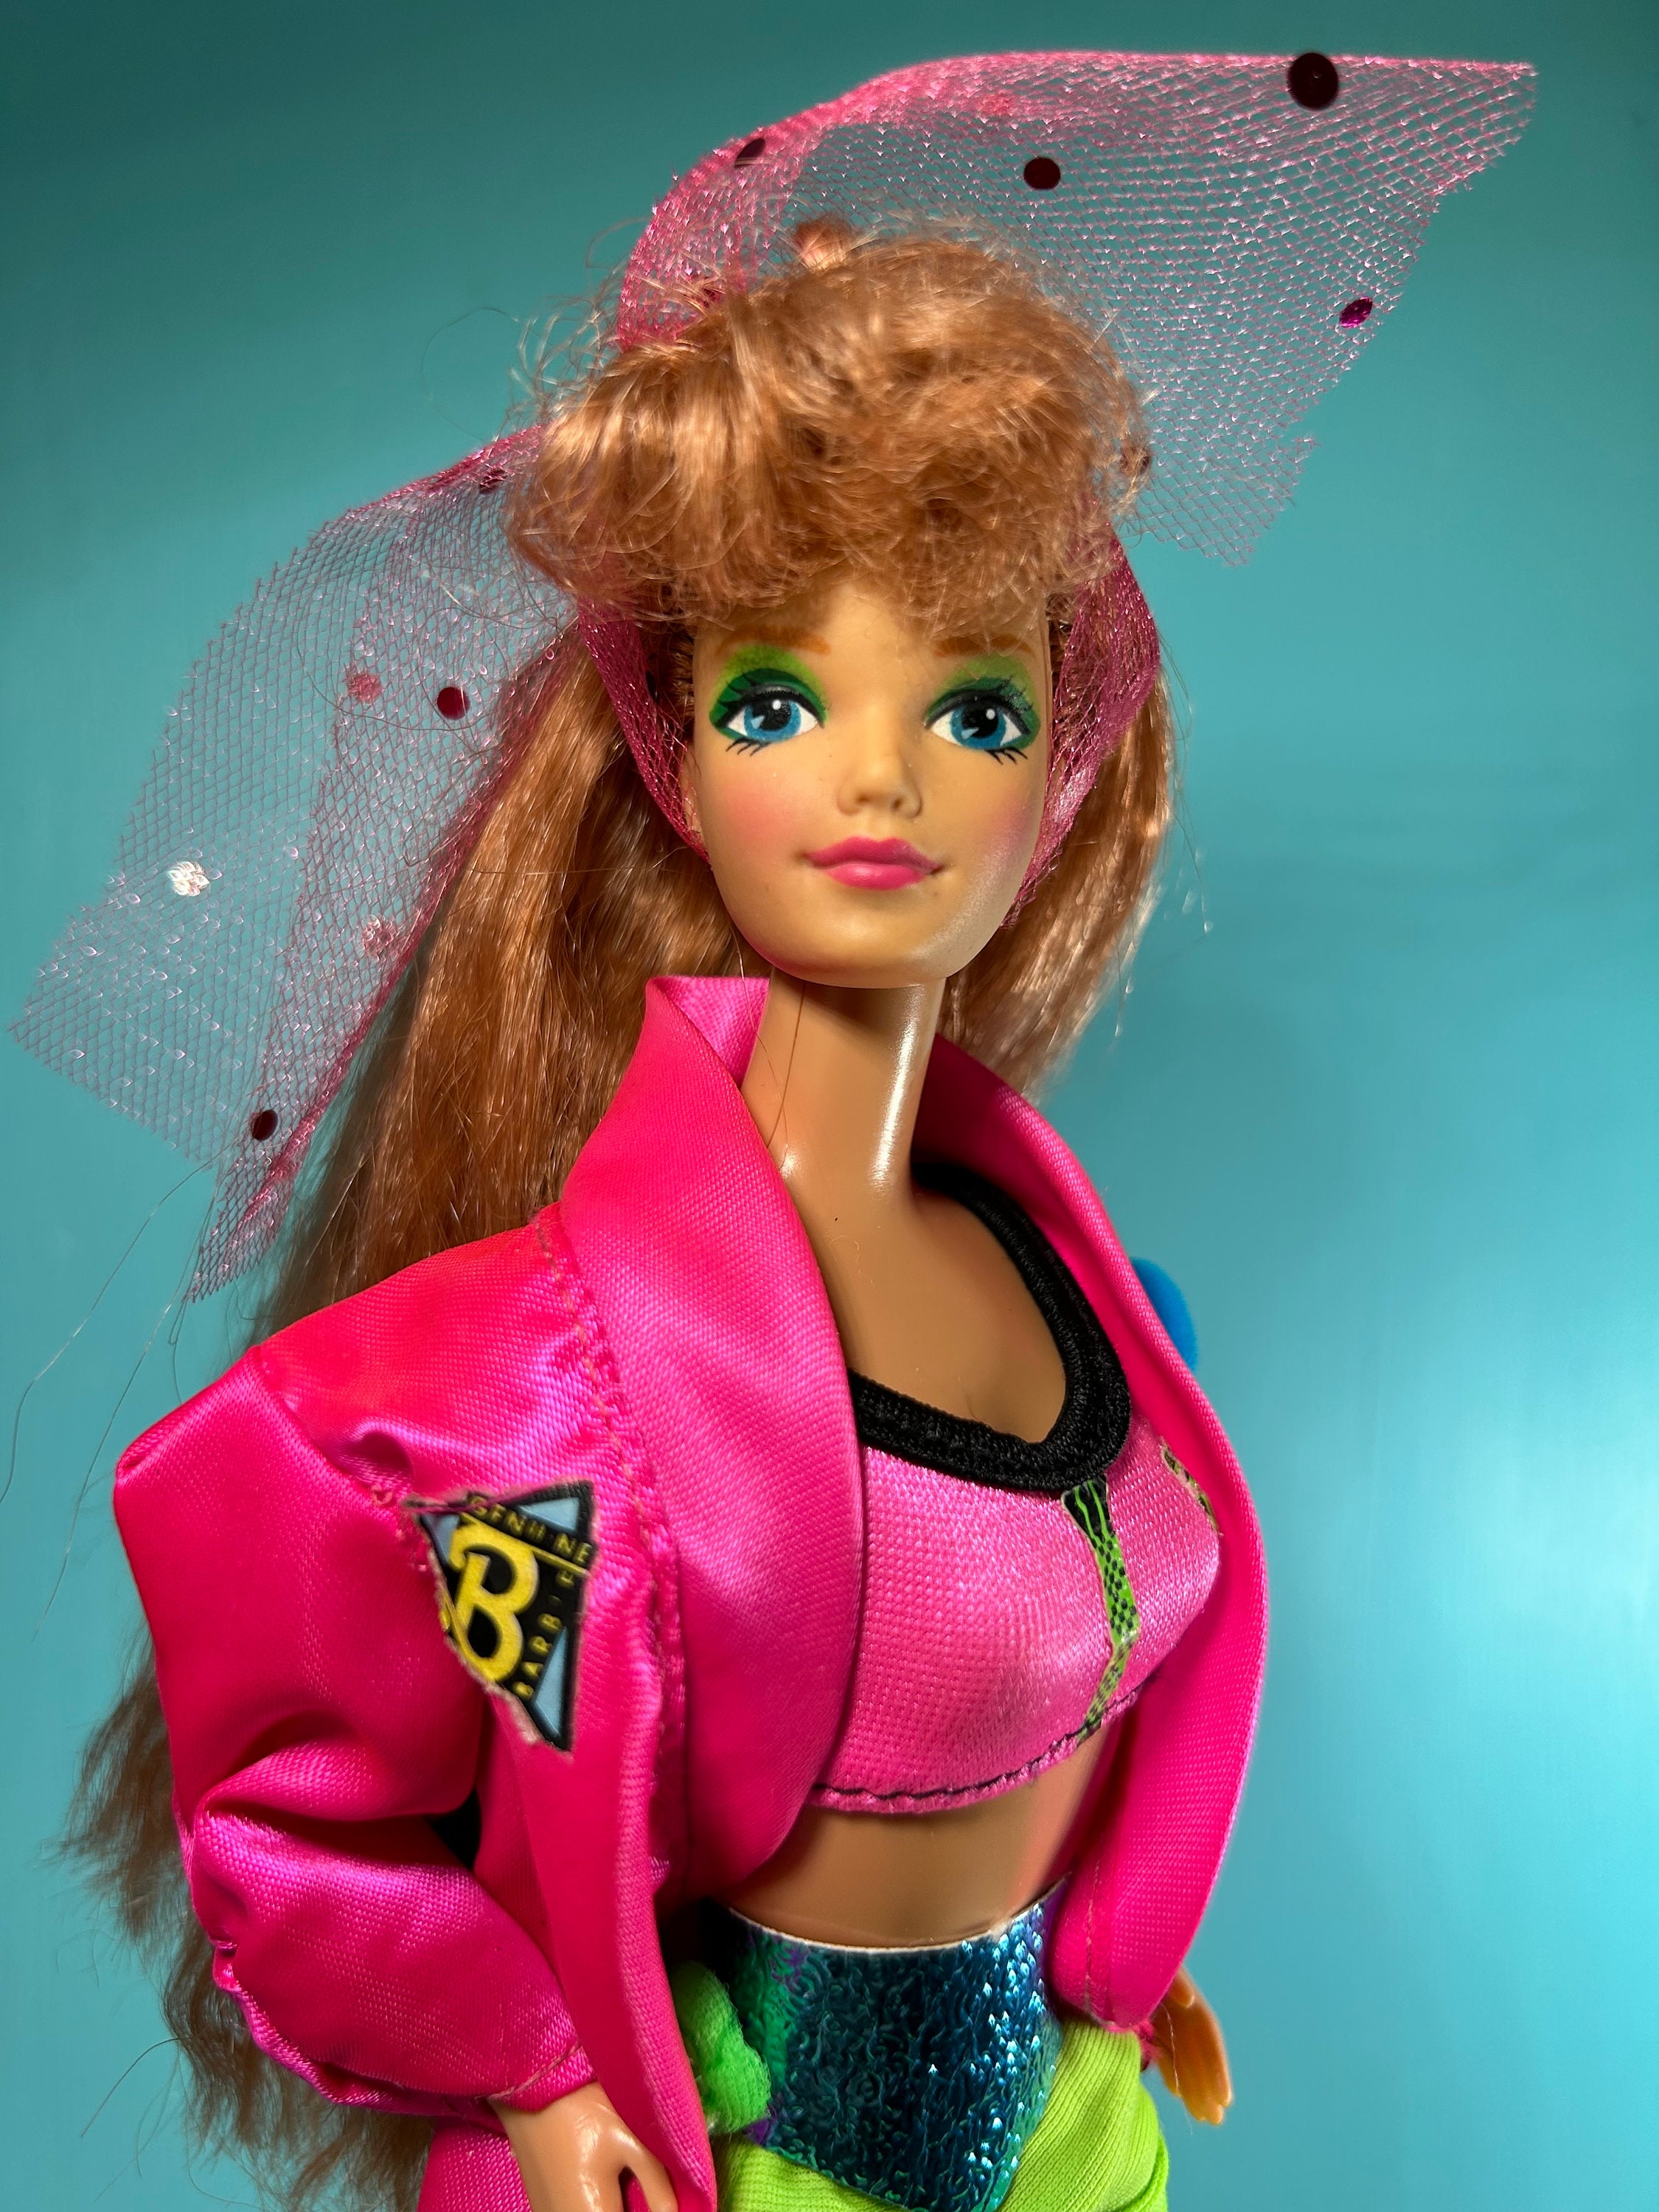 Barbie Cosplay Night! Dance club Kayla was one of my FAVORITE Barbie d